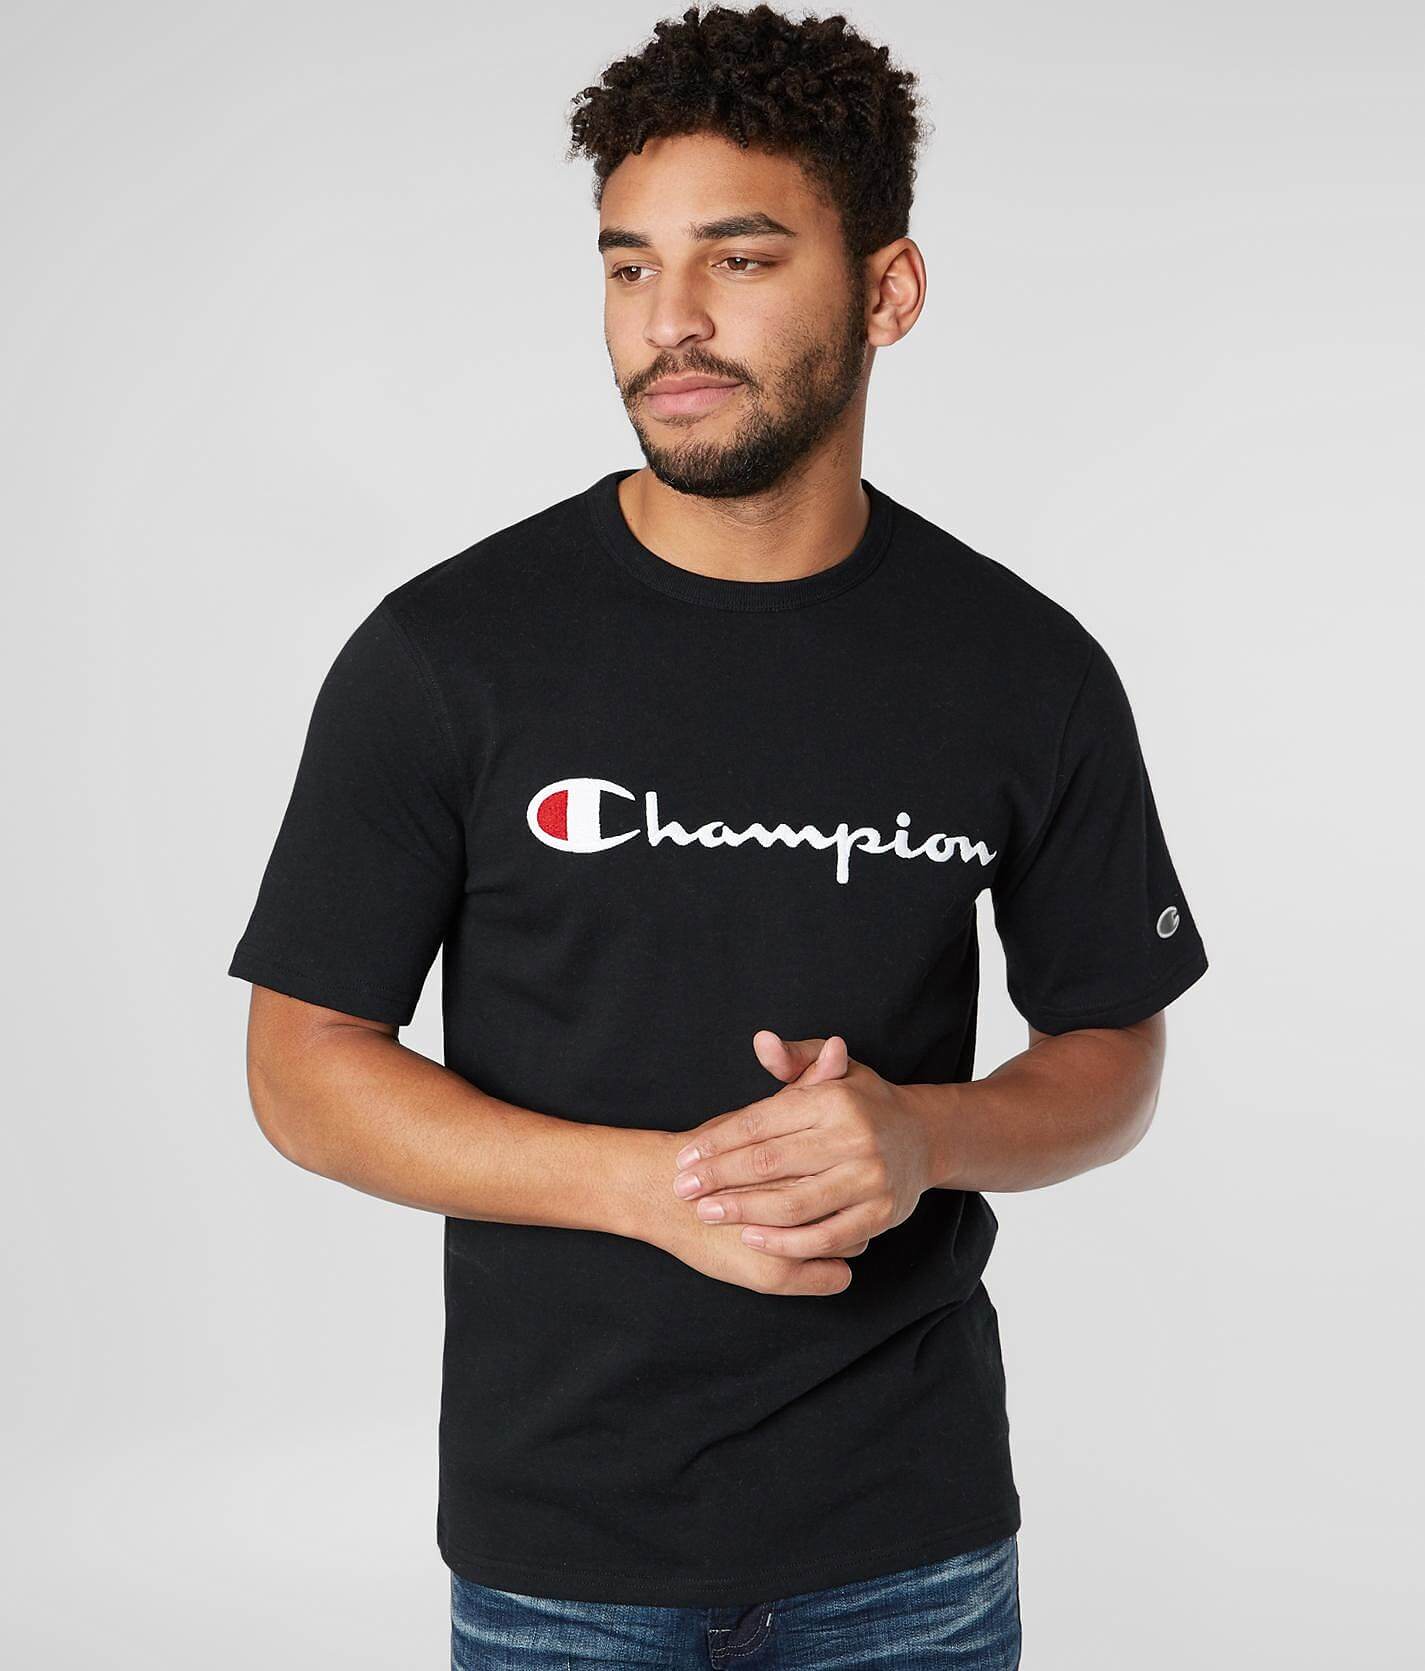 mens black champion shirt